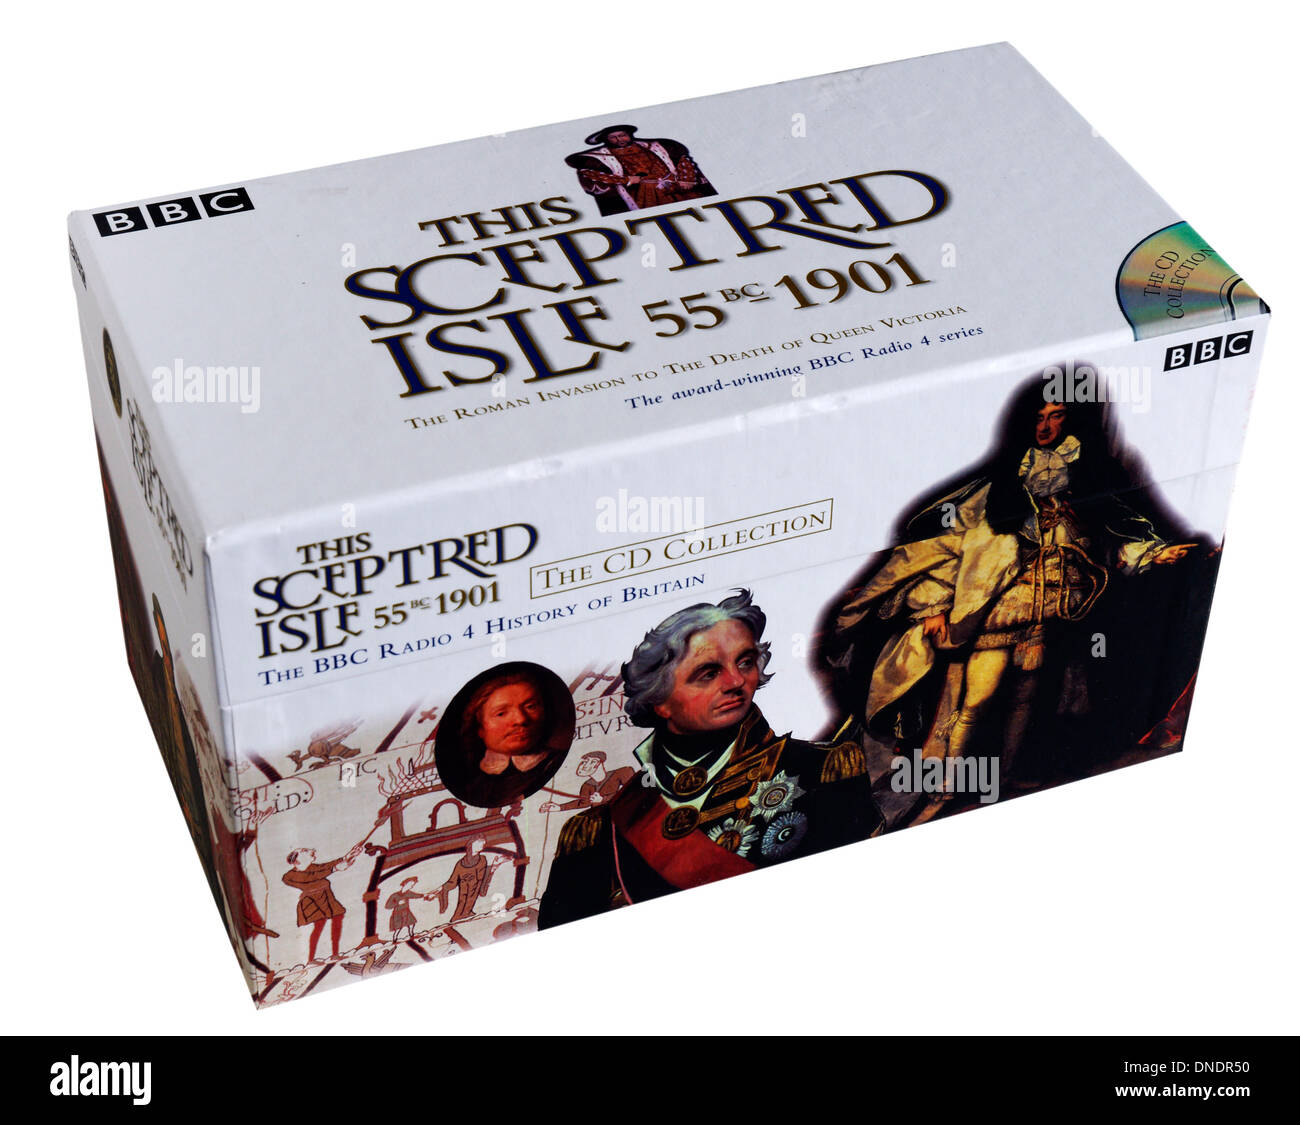 The BBC Radio 4 History of Britain Series This Sceptred Isle Stock Photo